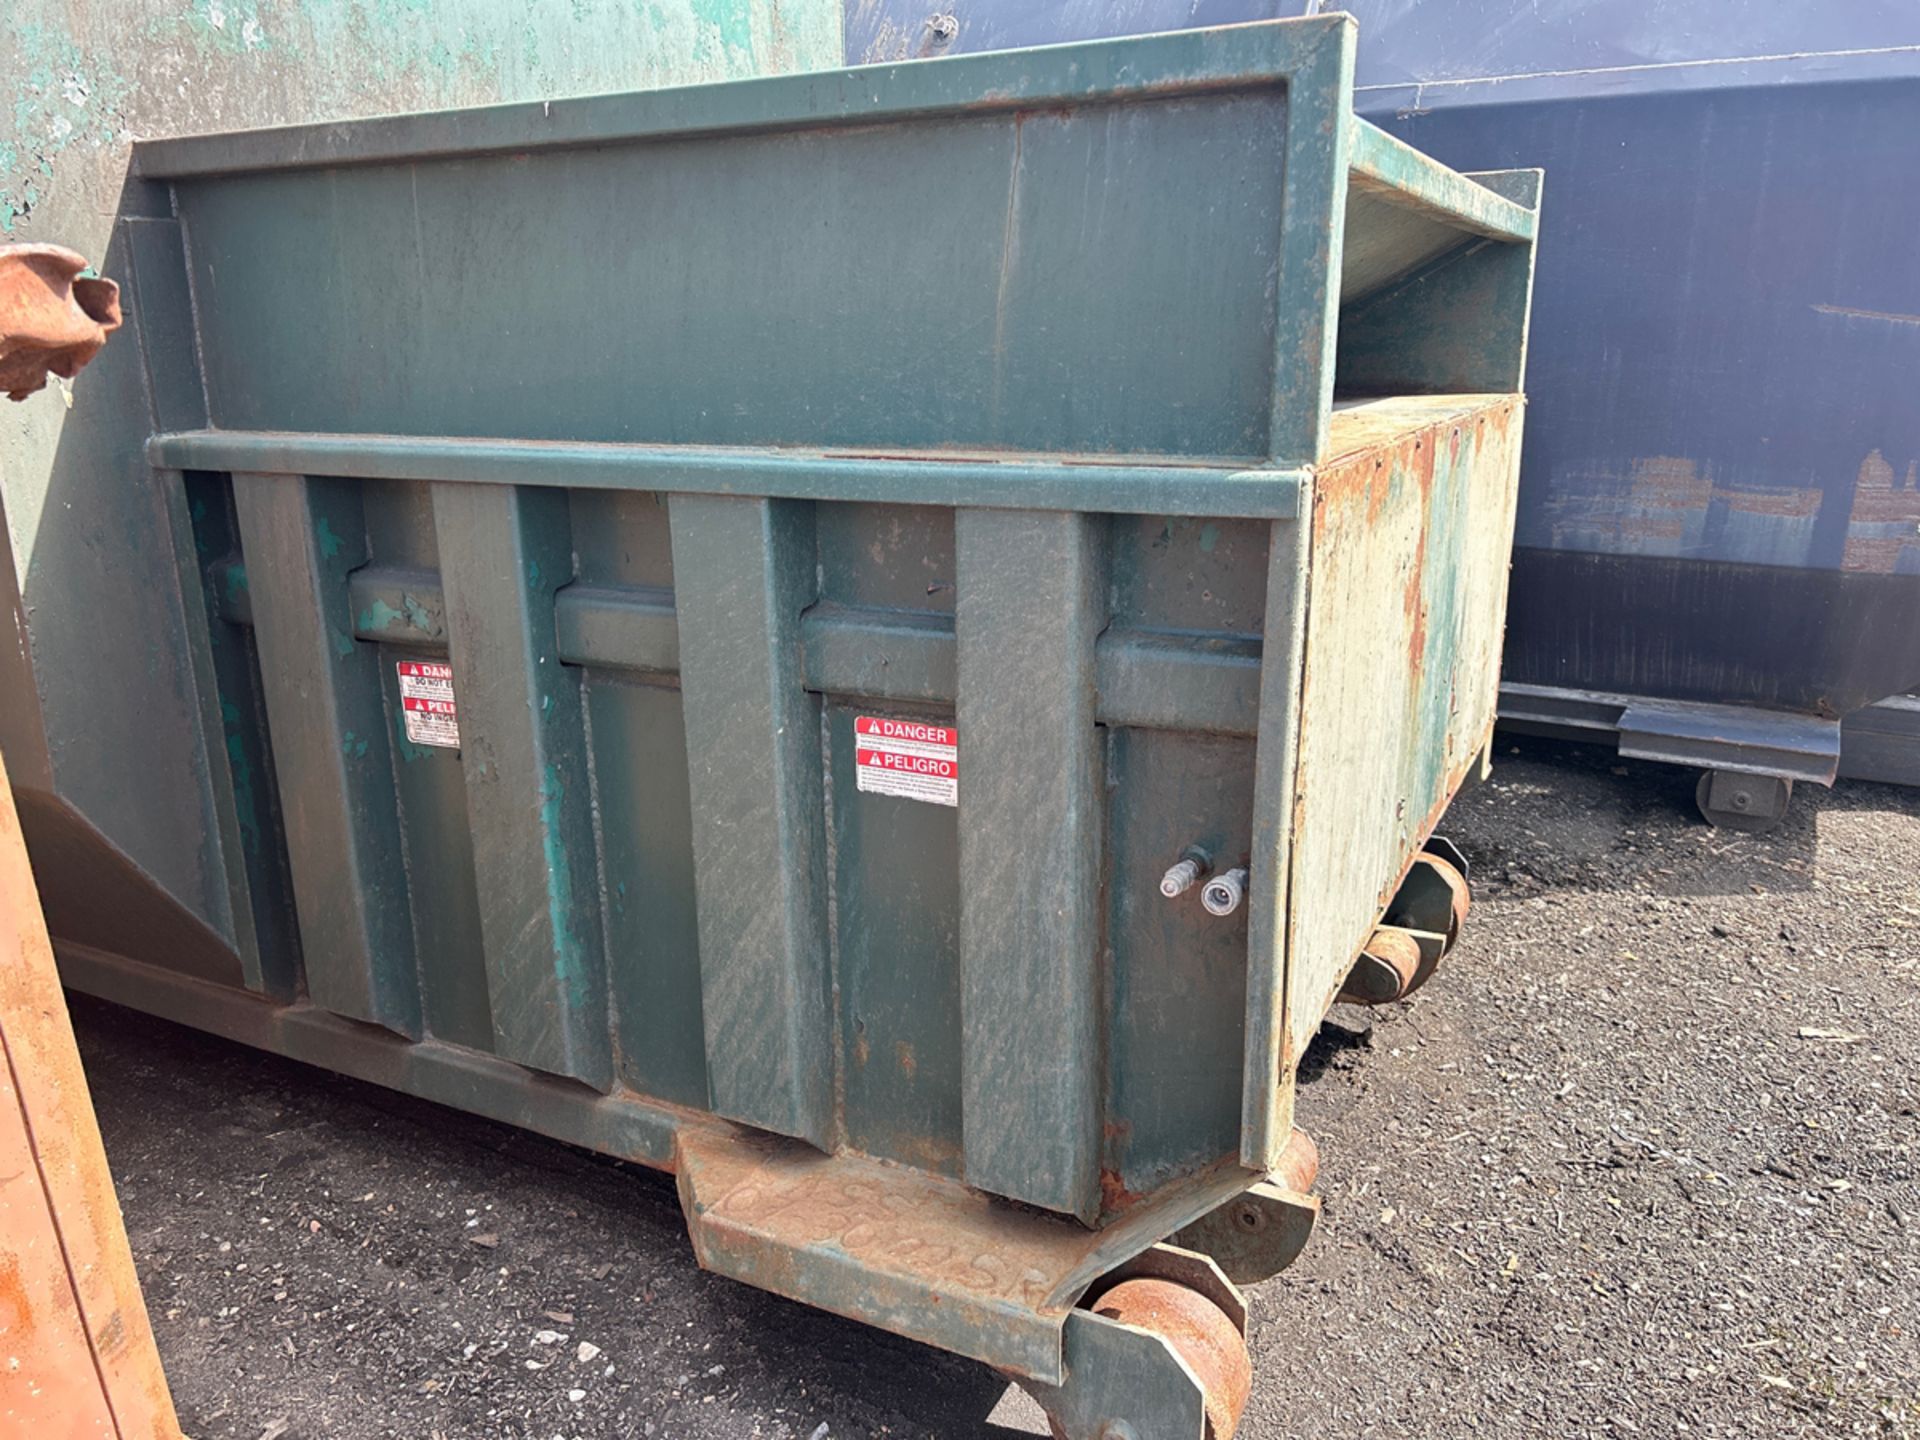 Wastequip Galbreath Commercial Trash Compactor (Monroe, NJ location) - Image 10 of 10